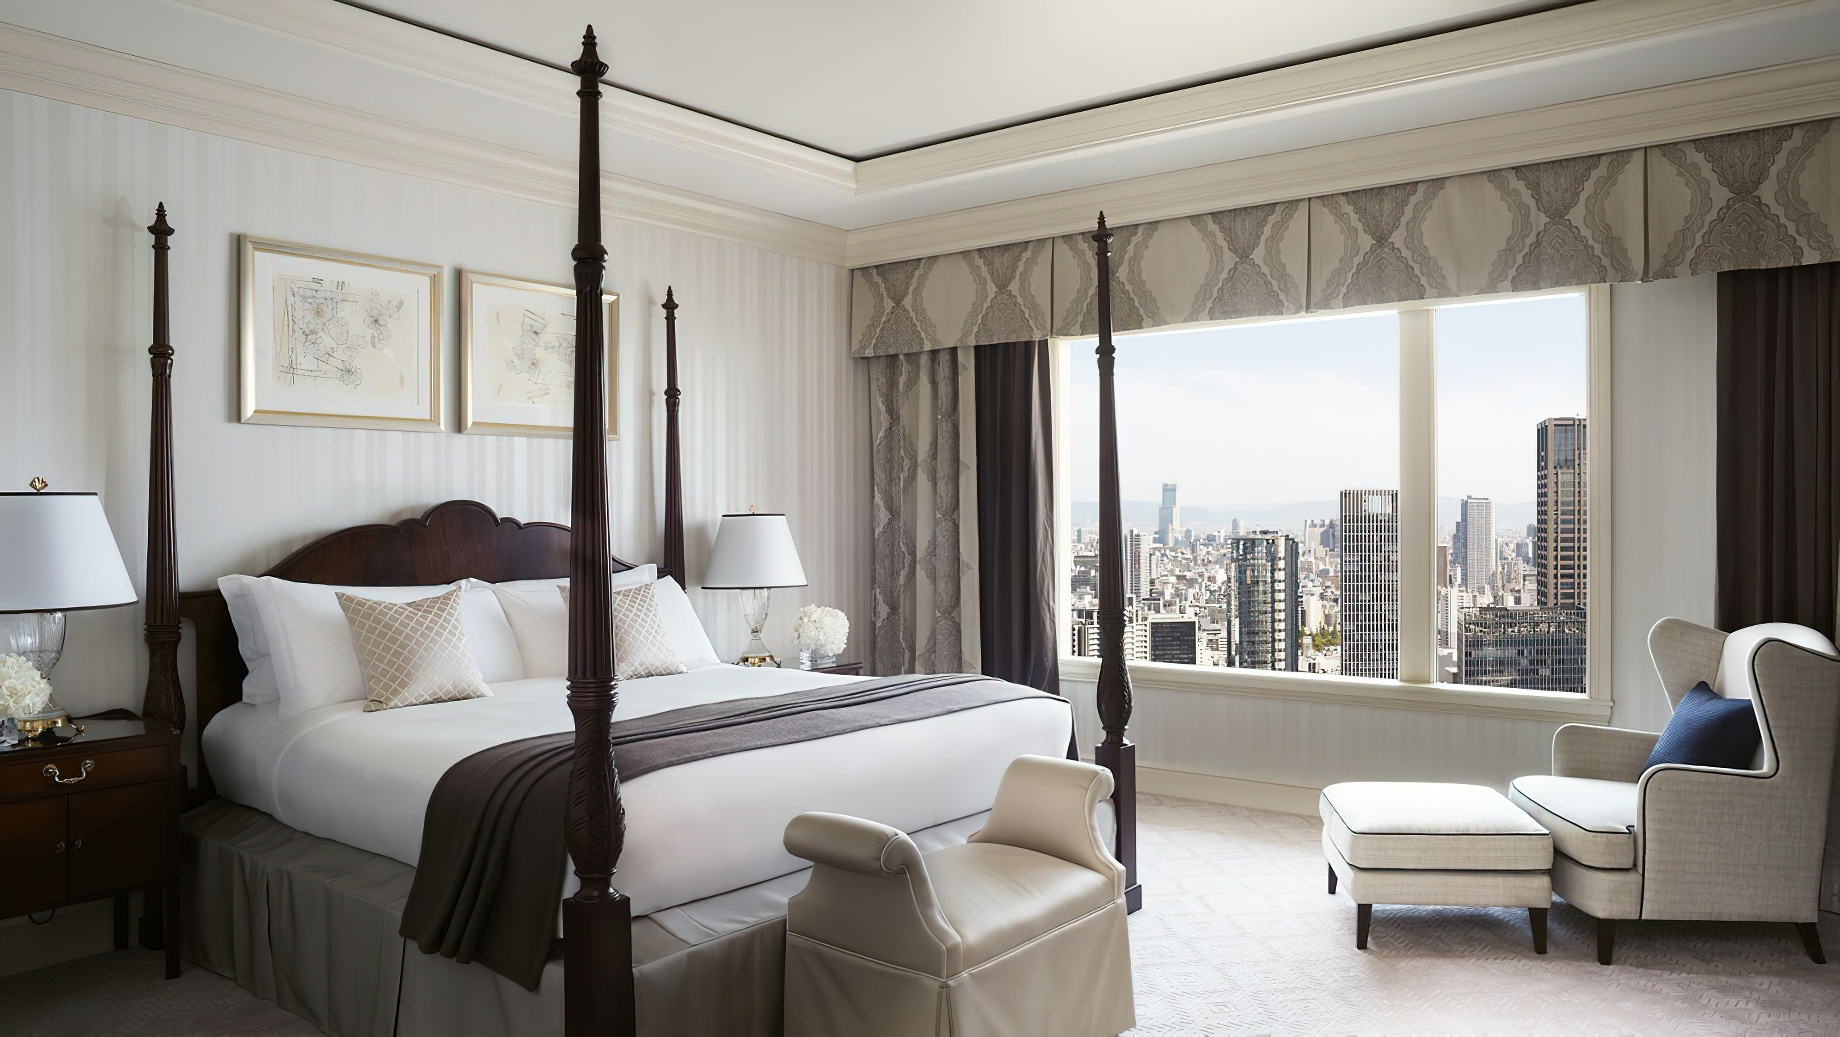 The Ritz-Carlton, Osaka Hotel - Osaka, Japan - Ritz-Carlton Suite Bedroom